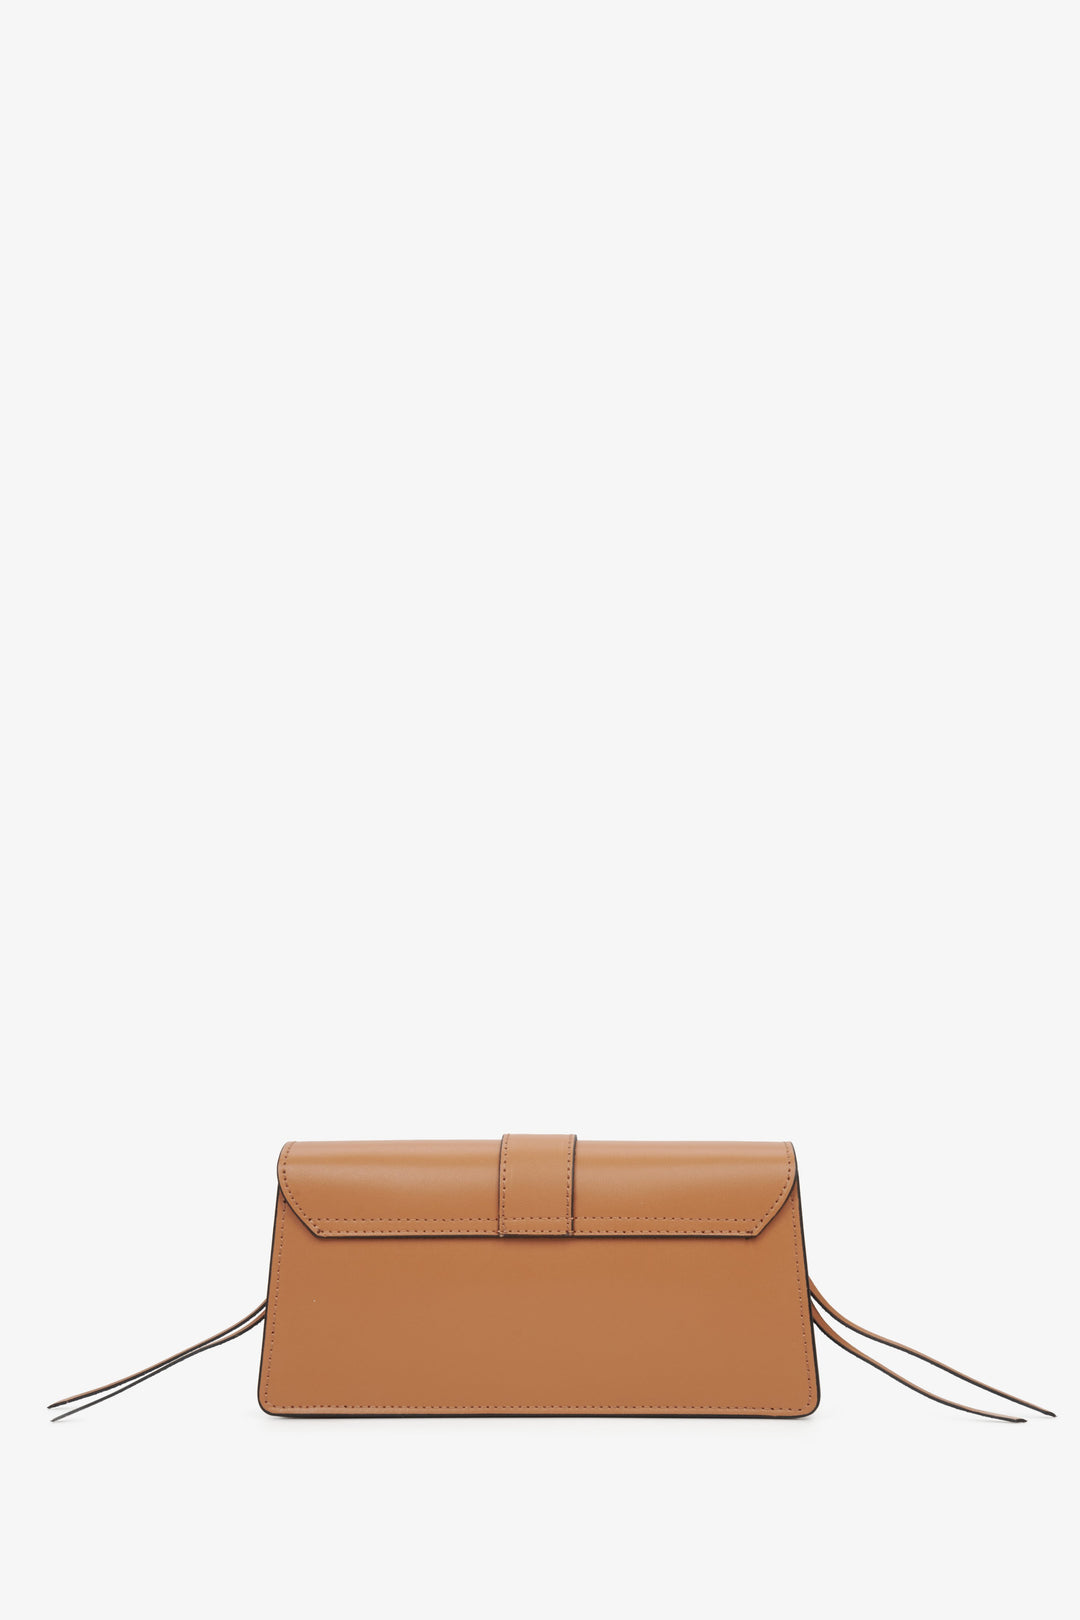 Ganuine leather women's brown handbag Estro - reverse.